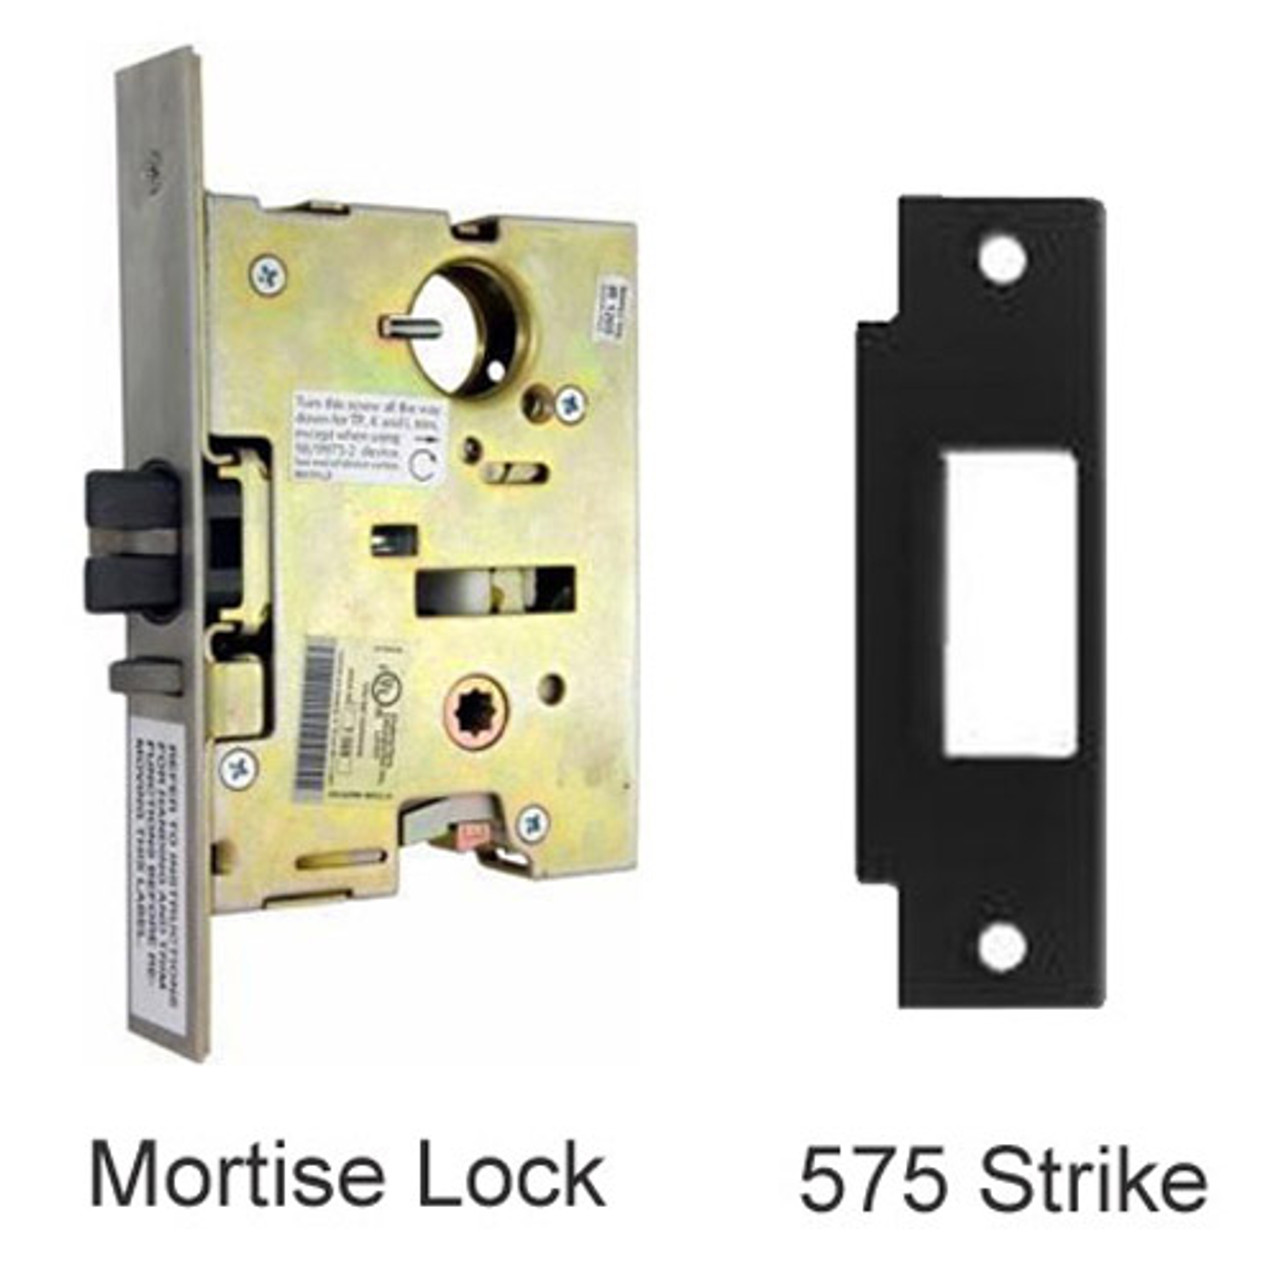 EL9875K-US32D-4 Von Duprin Mortise Lock and Strike